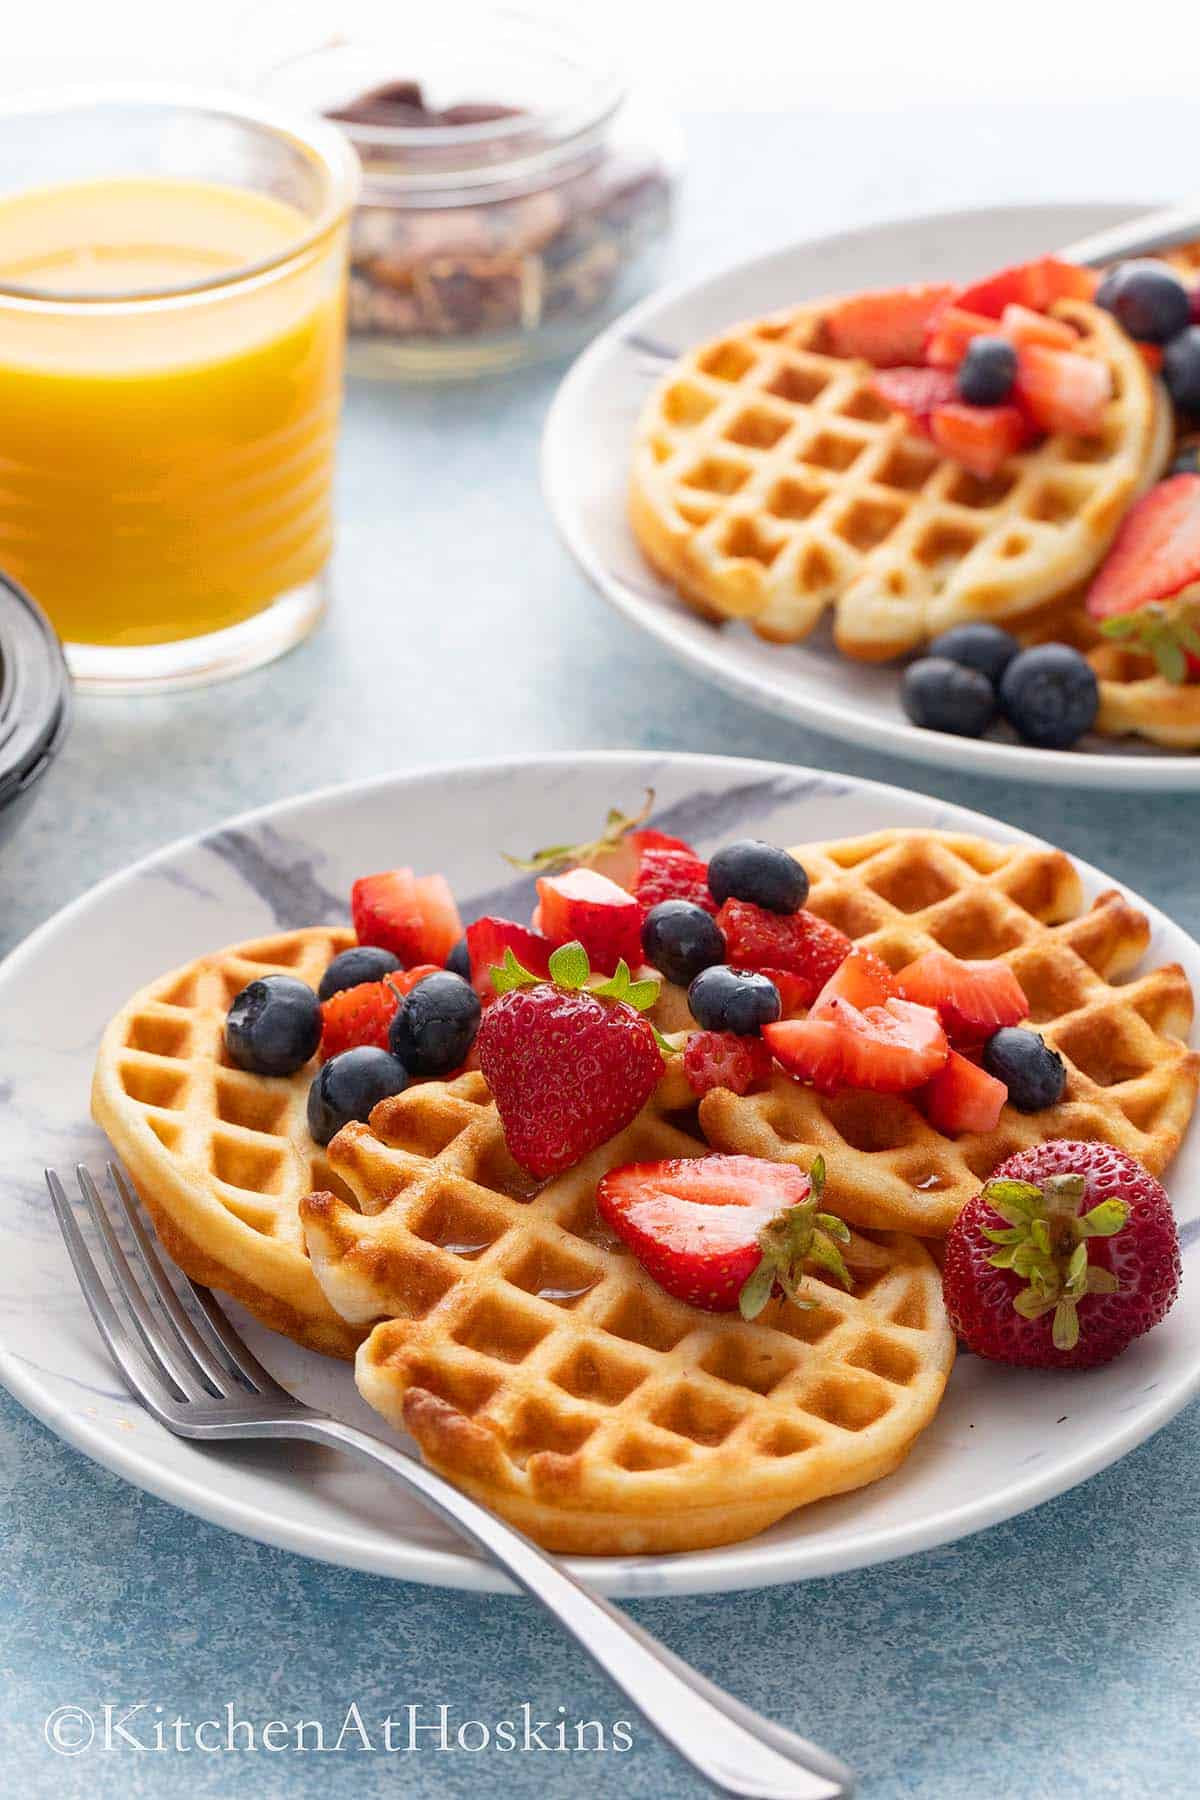 Sunday Breakfast: Whole Foods Mini Waffles